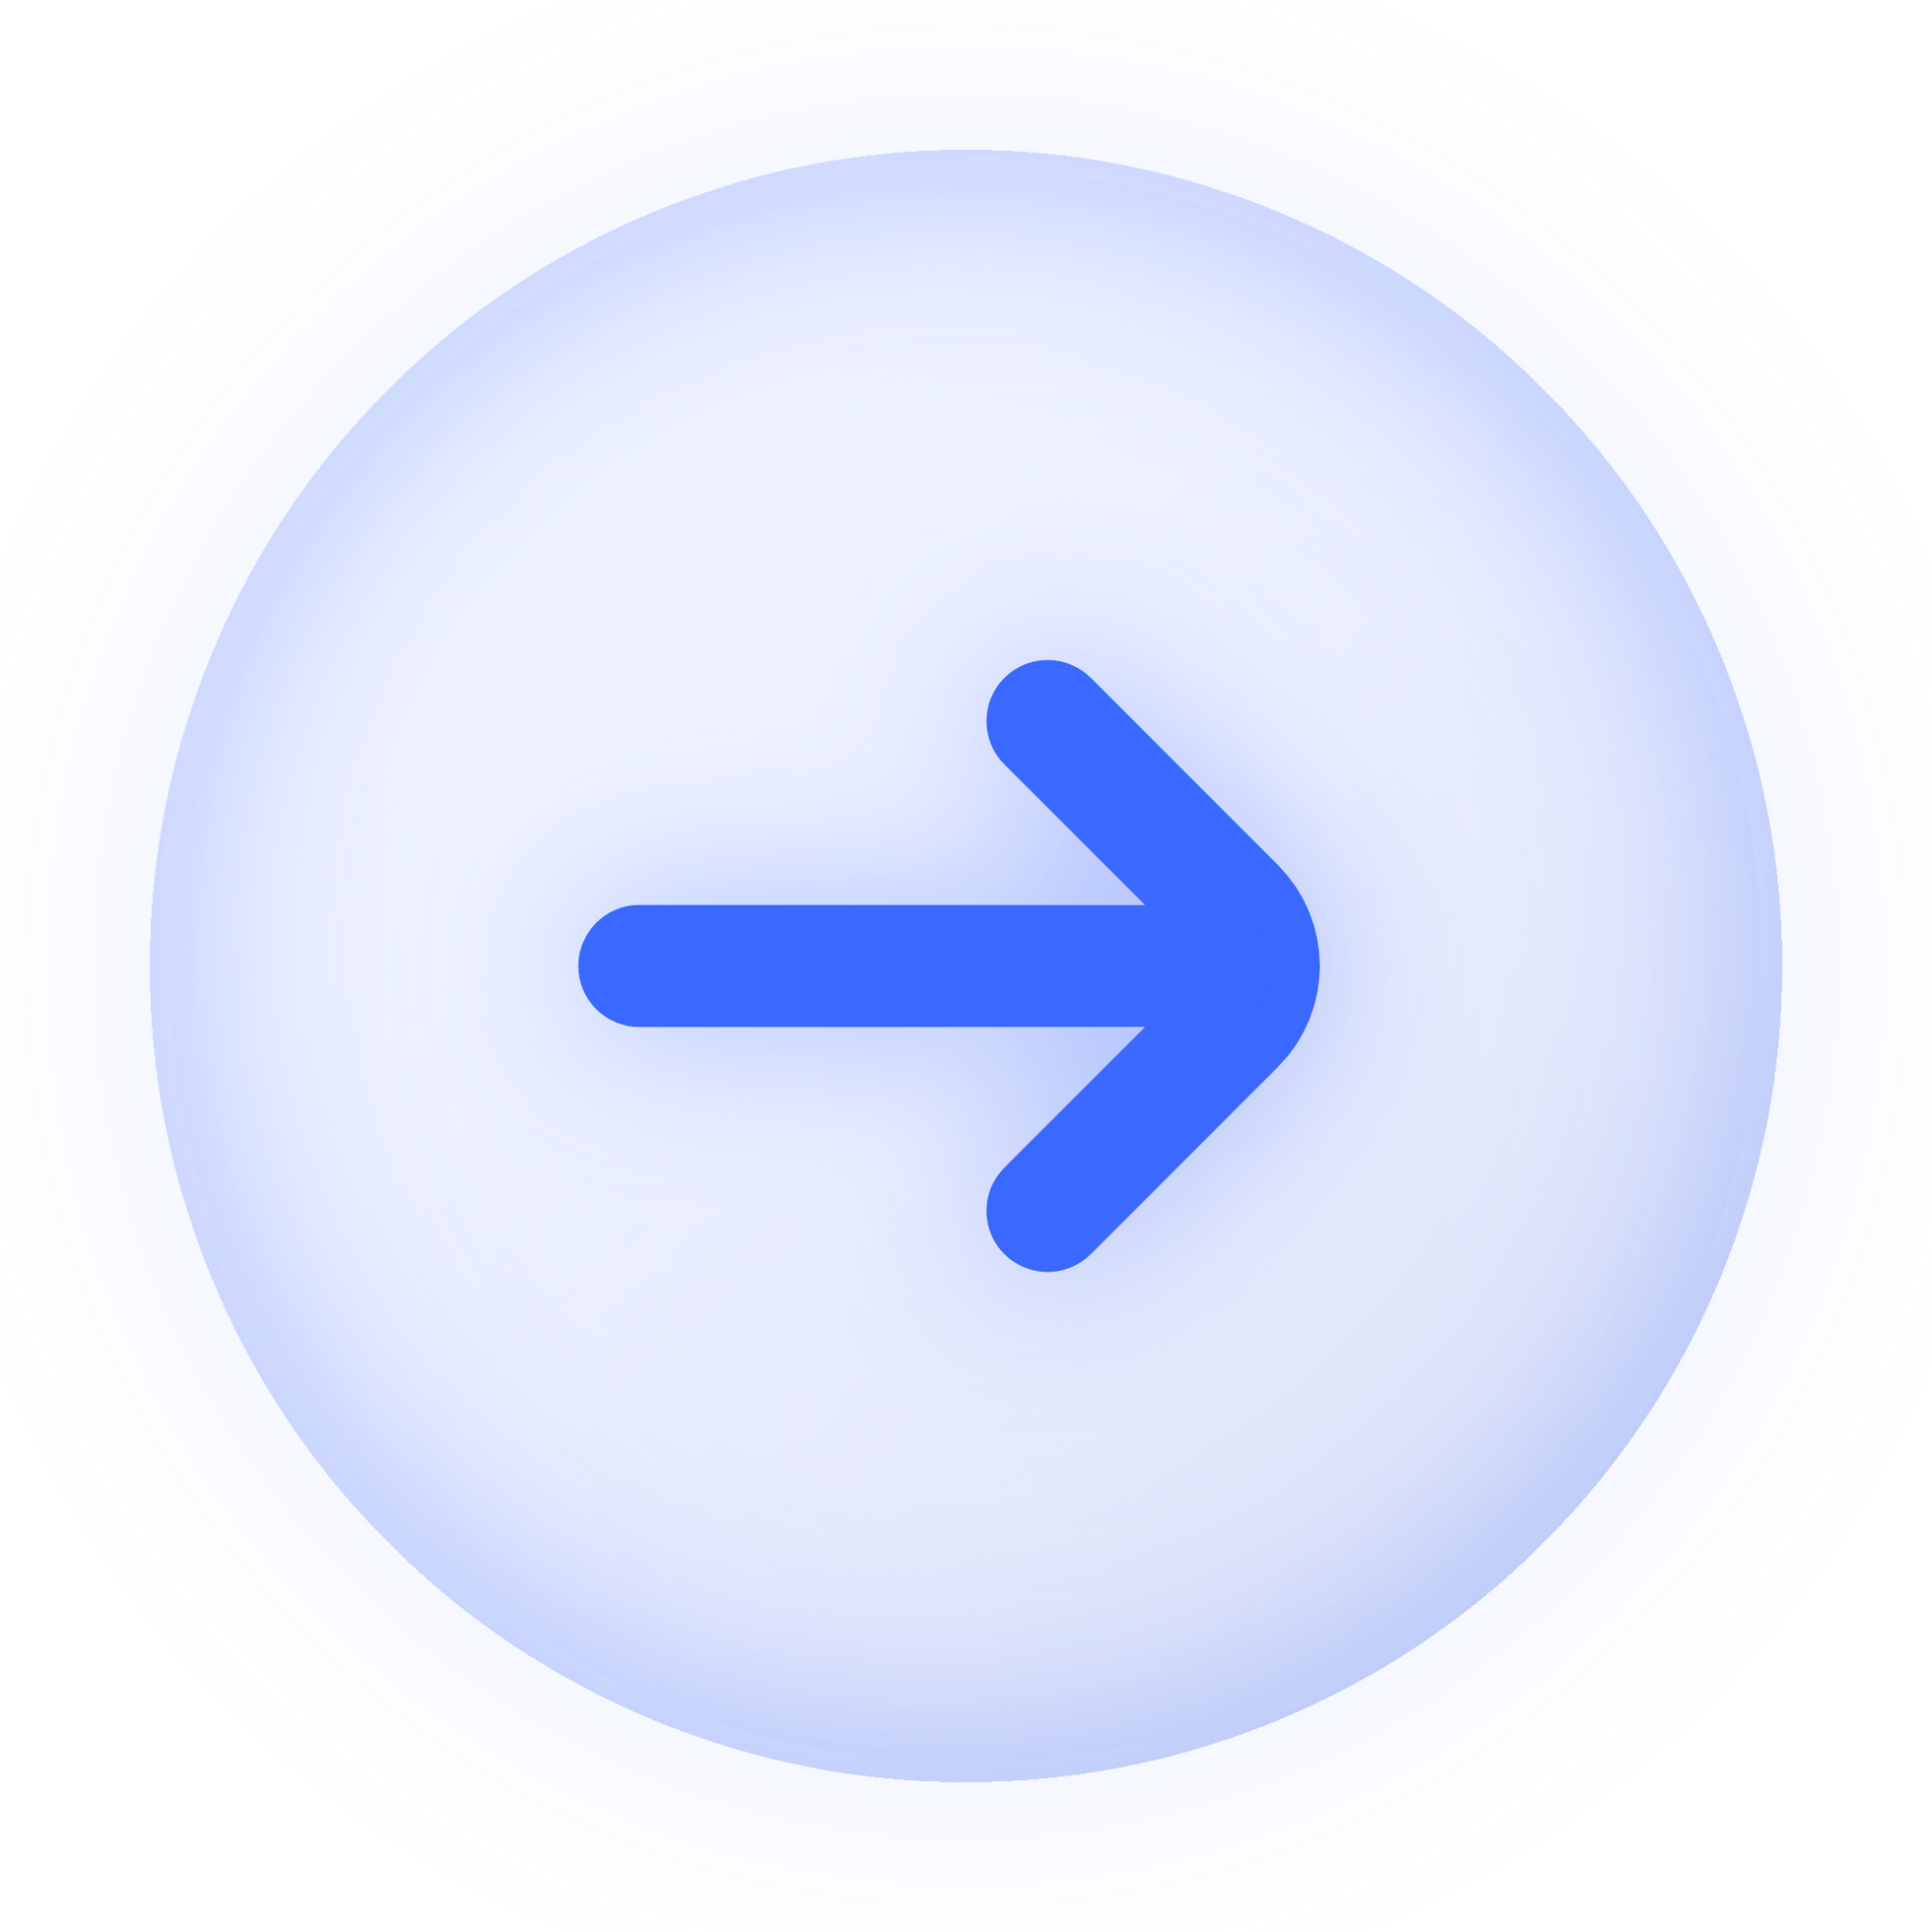 right circle icon